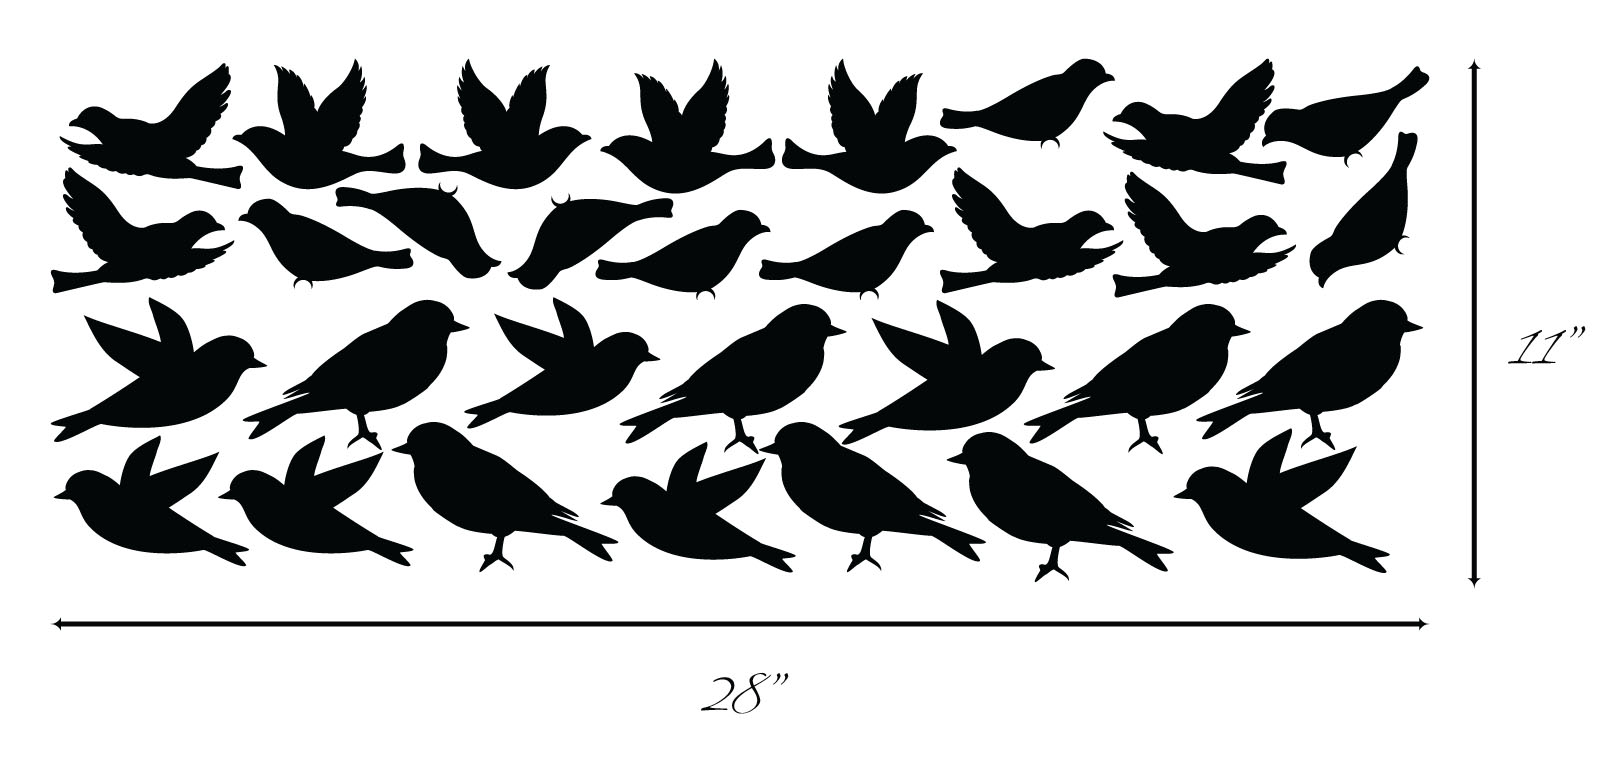 Bird Powerline Wall Art Sticker Large Vinyl Transfer Graphic Decal Decor UK Bi13 